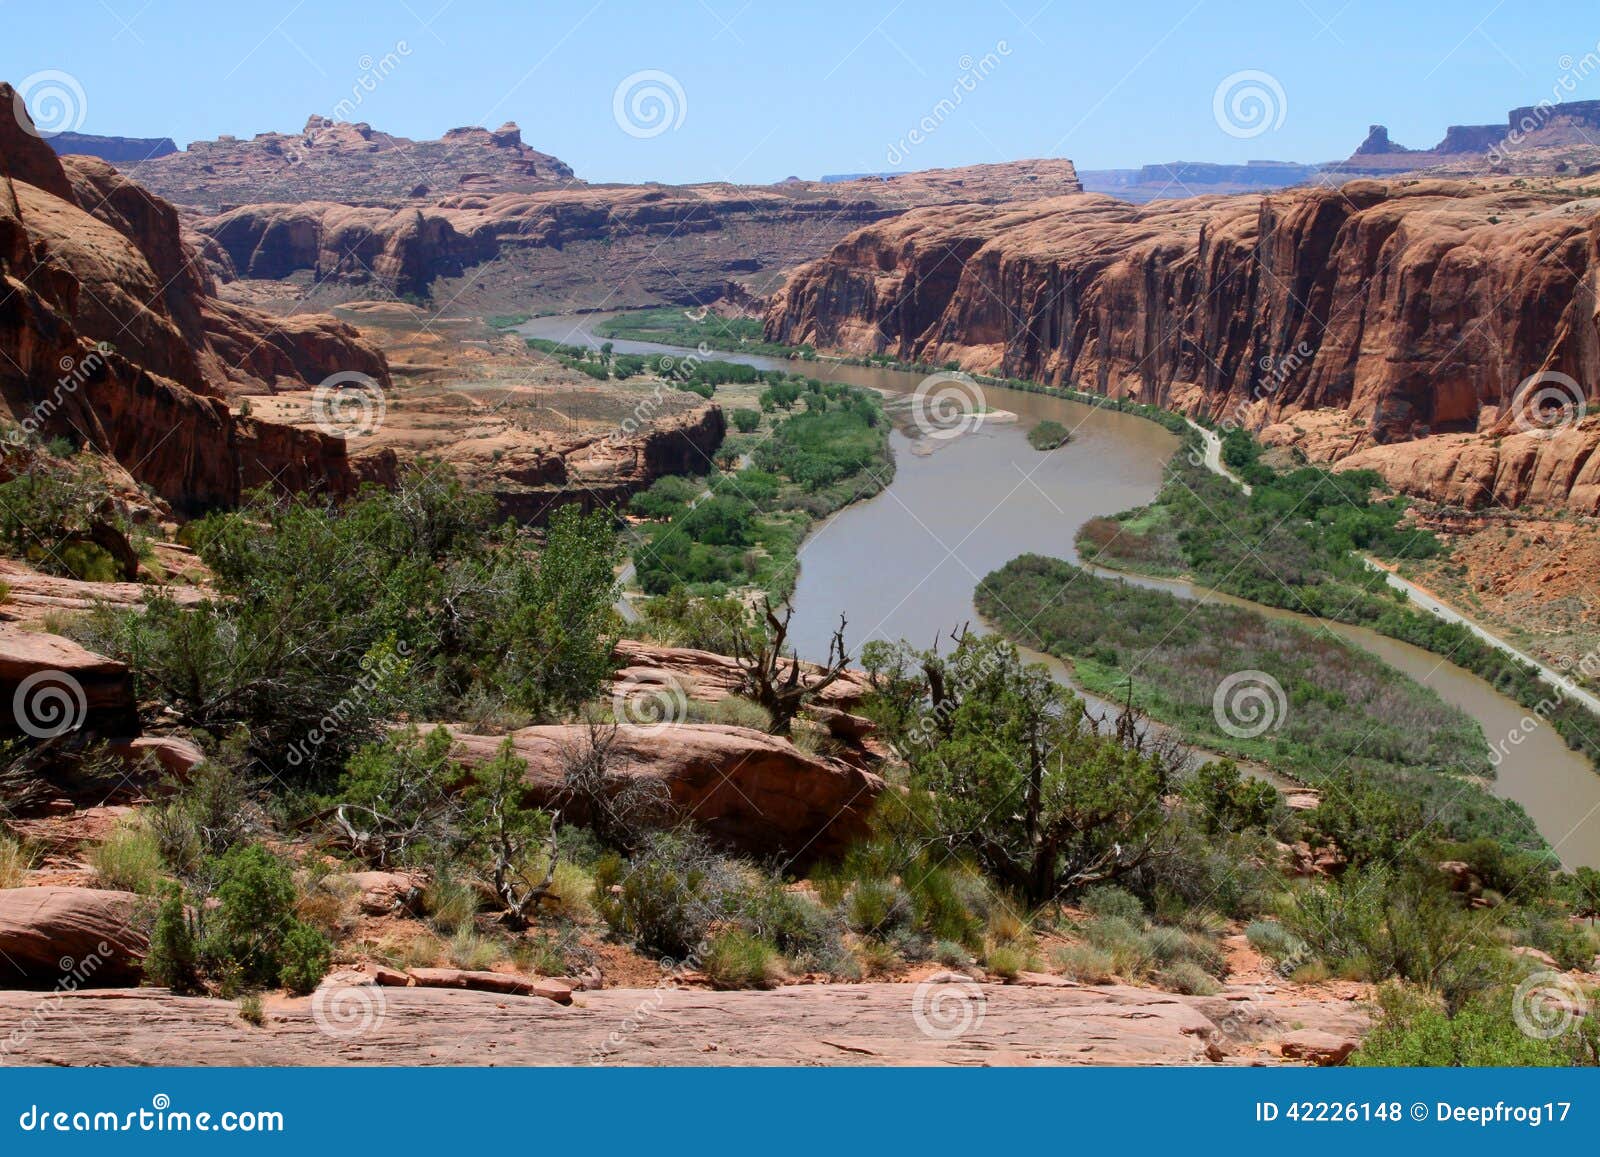 moab, utah and the colorado river